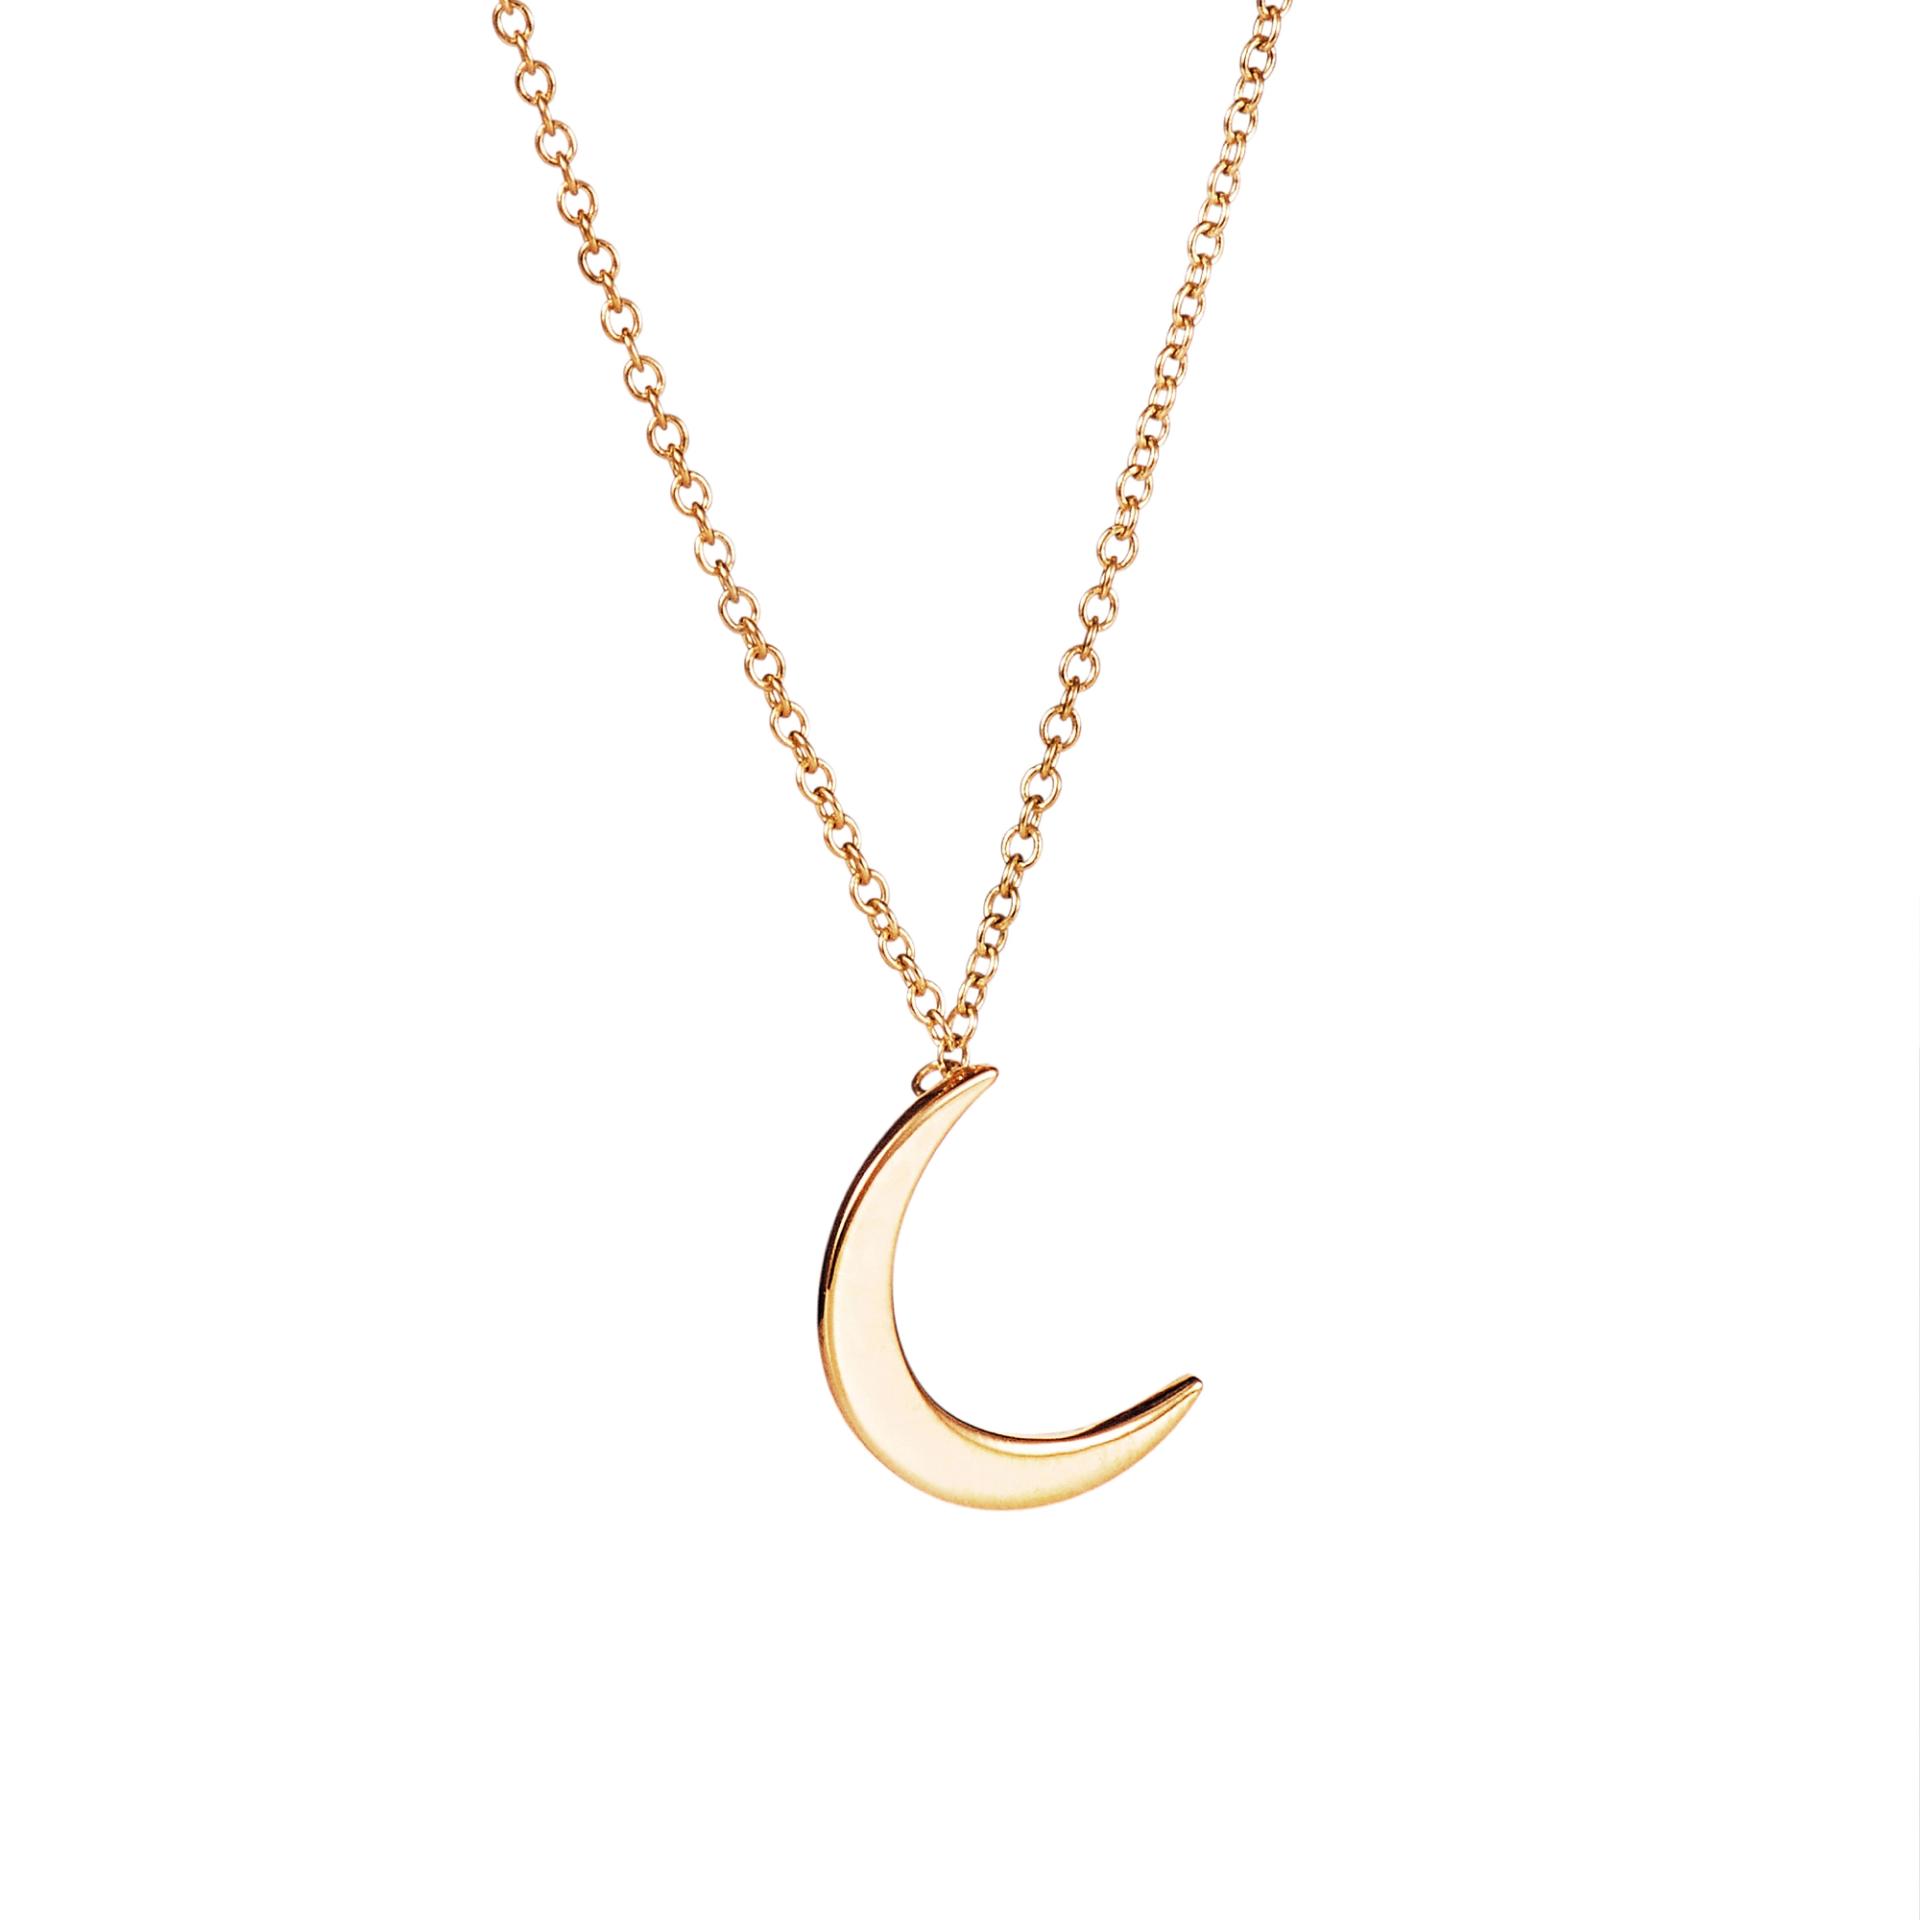 Pencez Moon Necklace